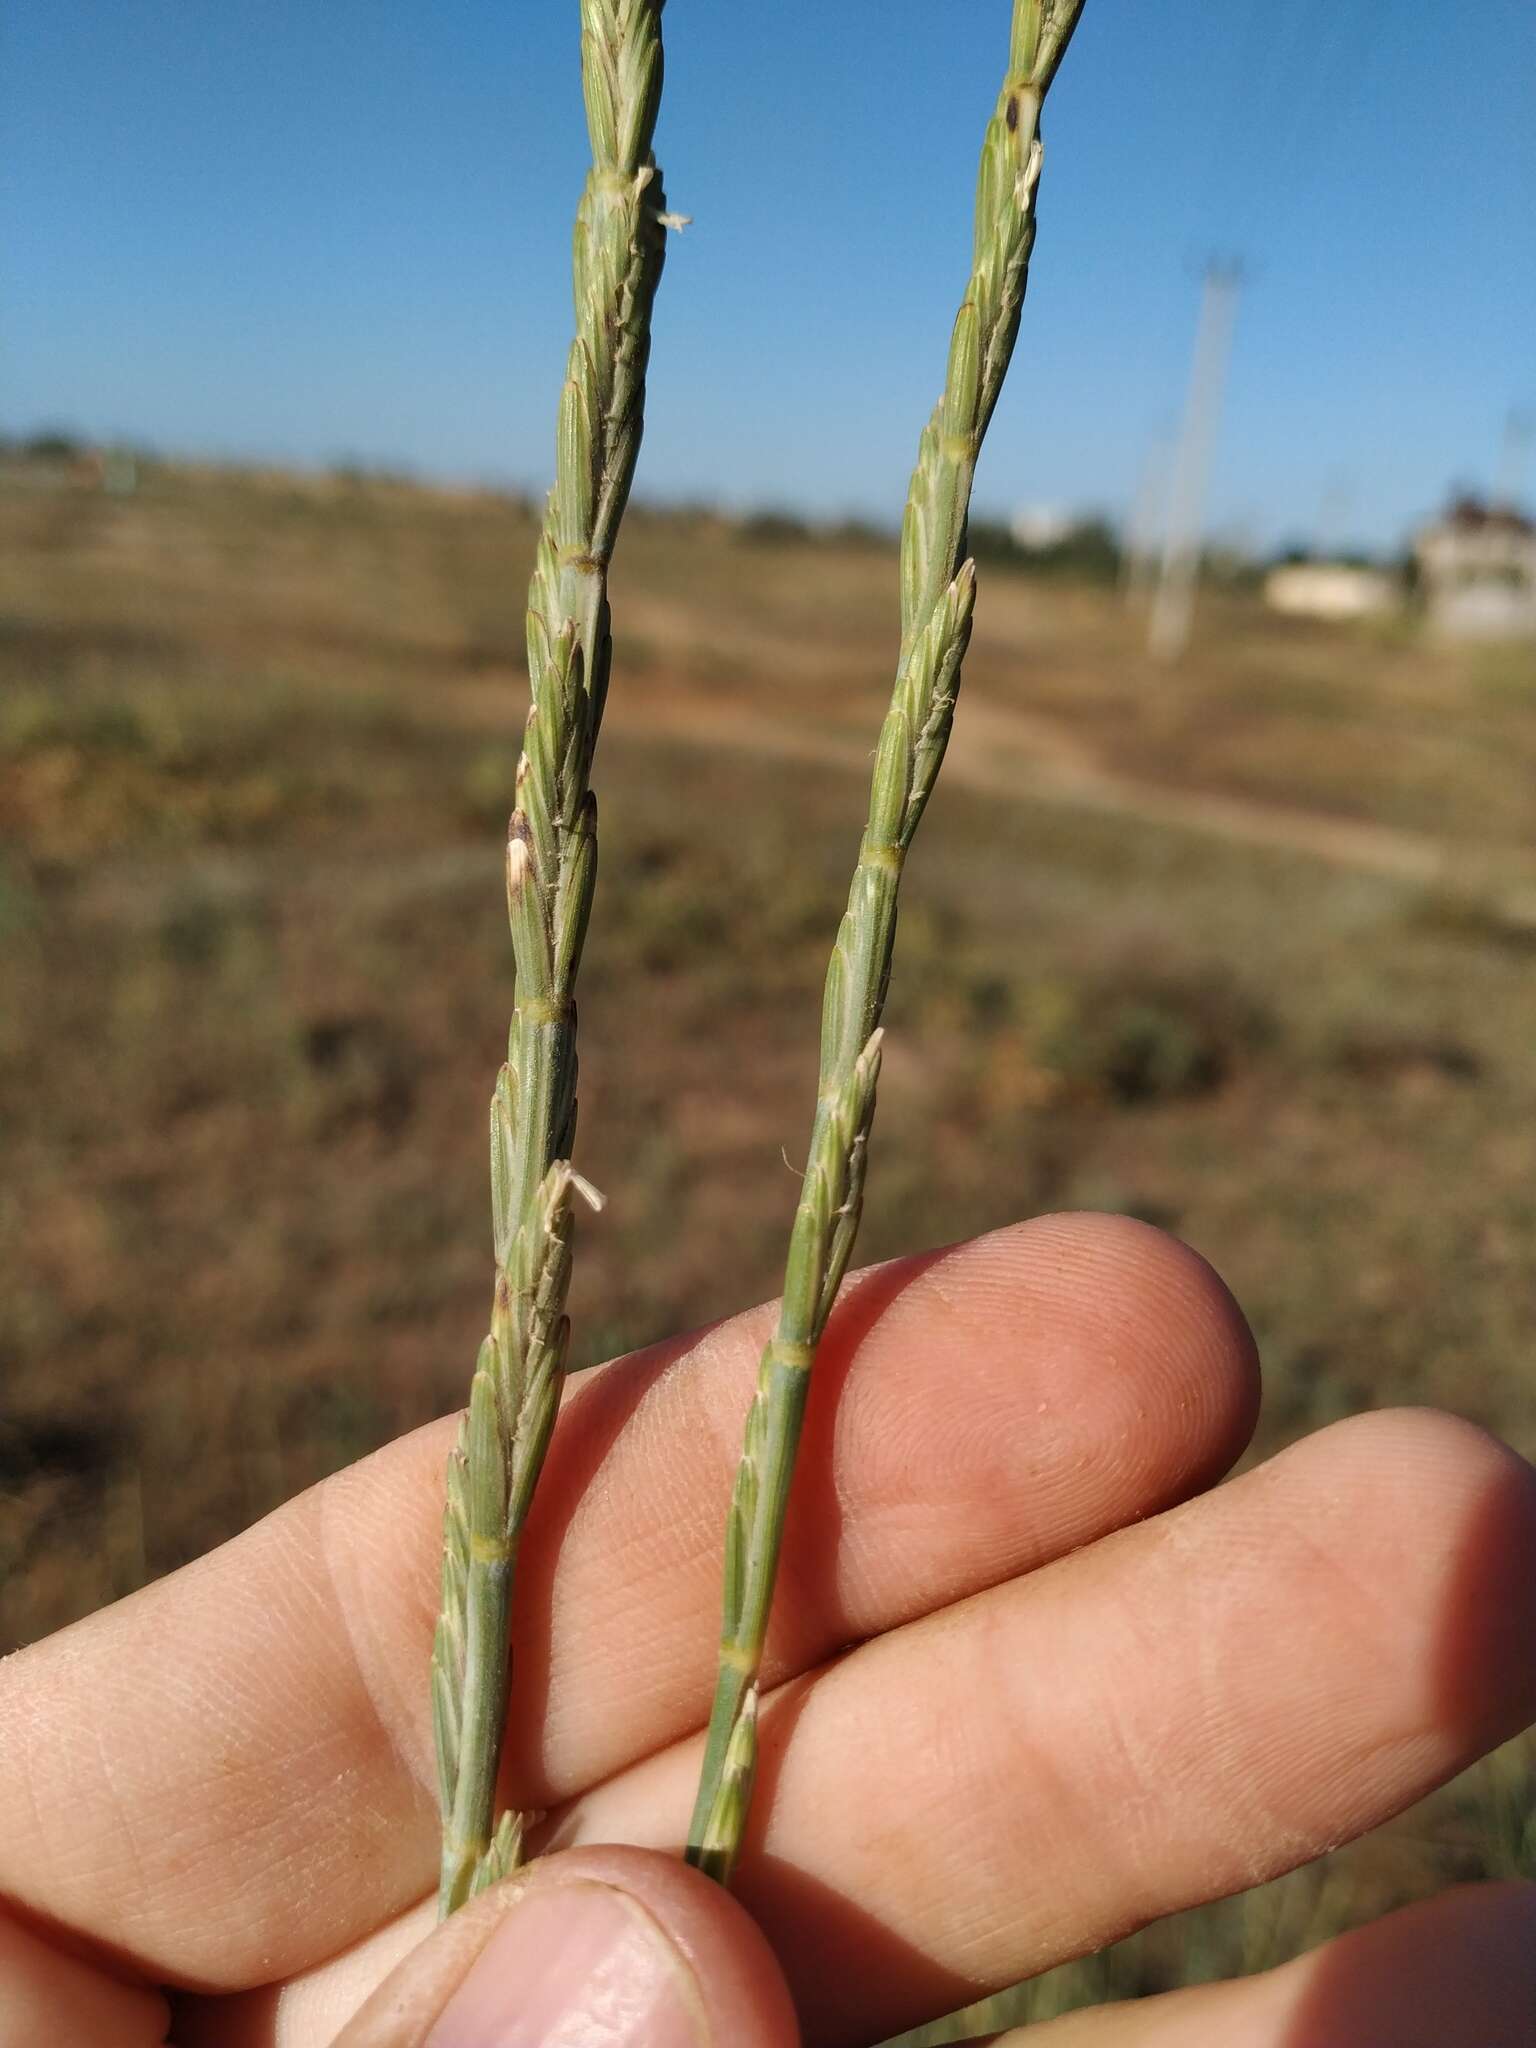 Image of tall wheatgrass